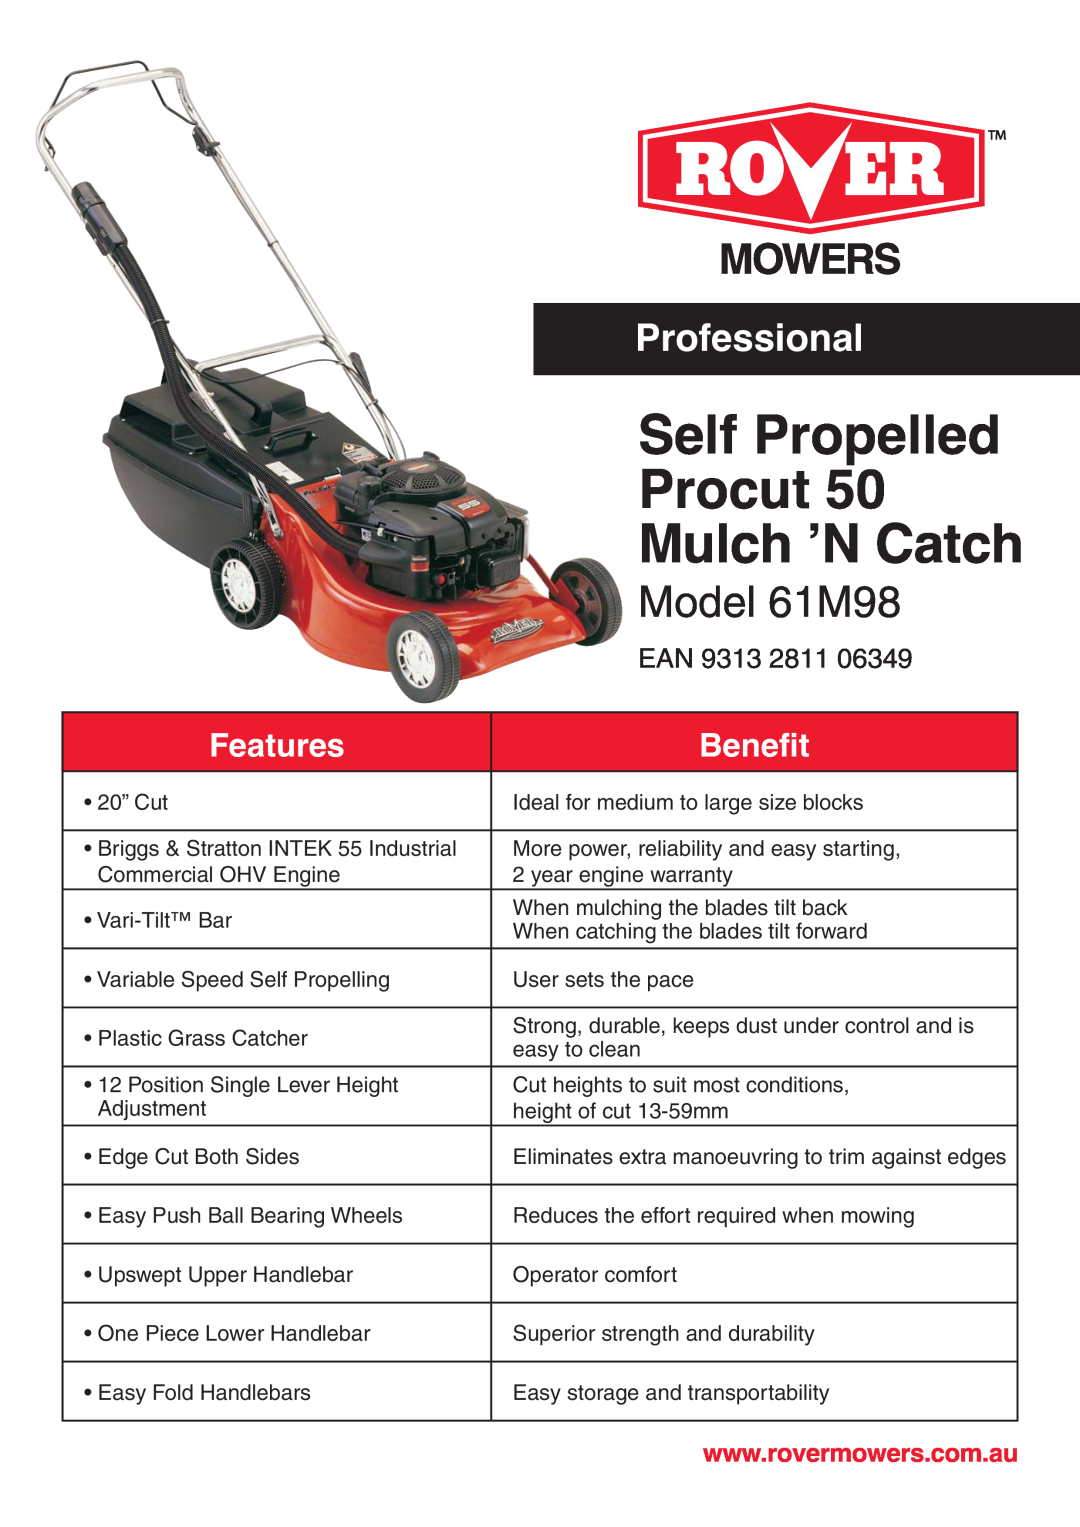 Rover ProCut 50 warranty Self Propelled, Procut, Mulch ʼN Catch, Model 61M98, Professional, Features, Benefit, Ean 